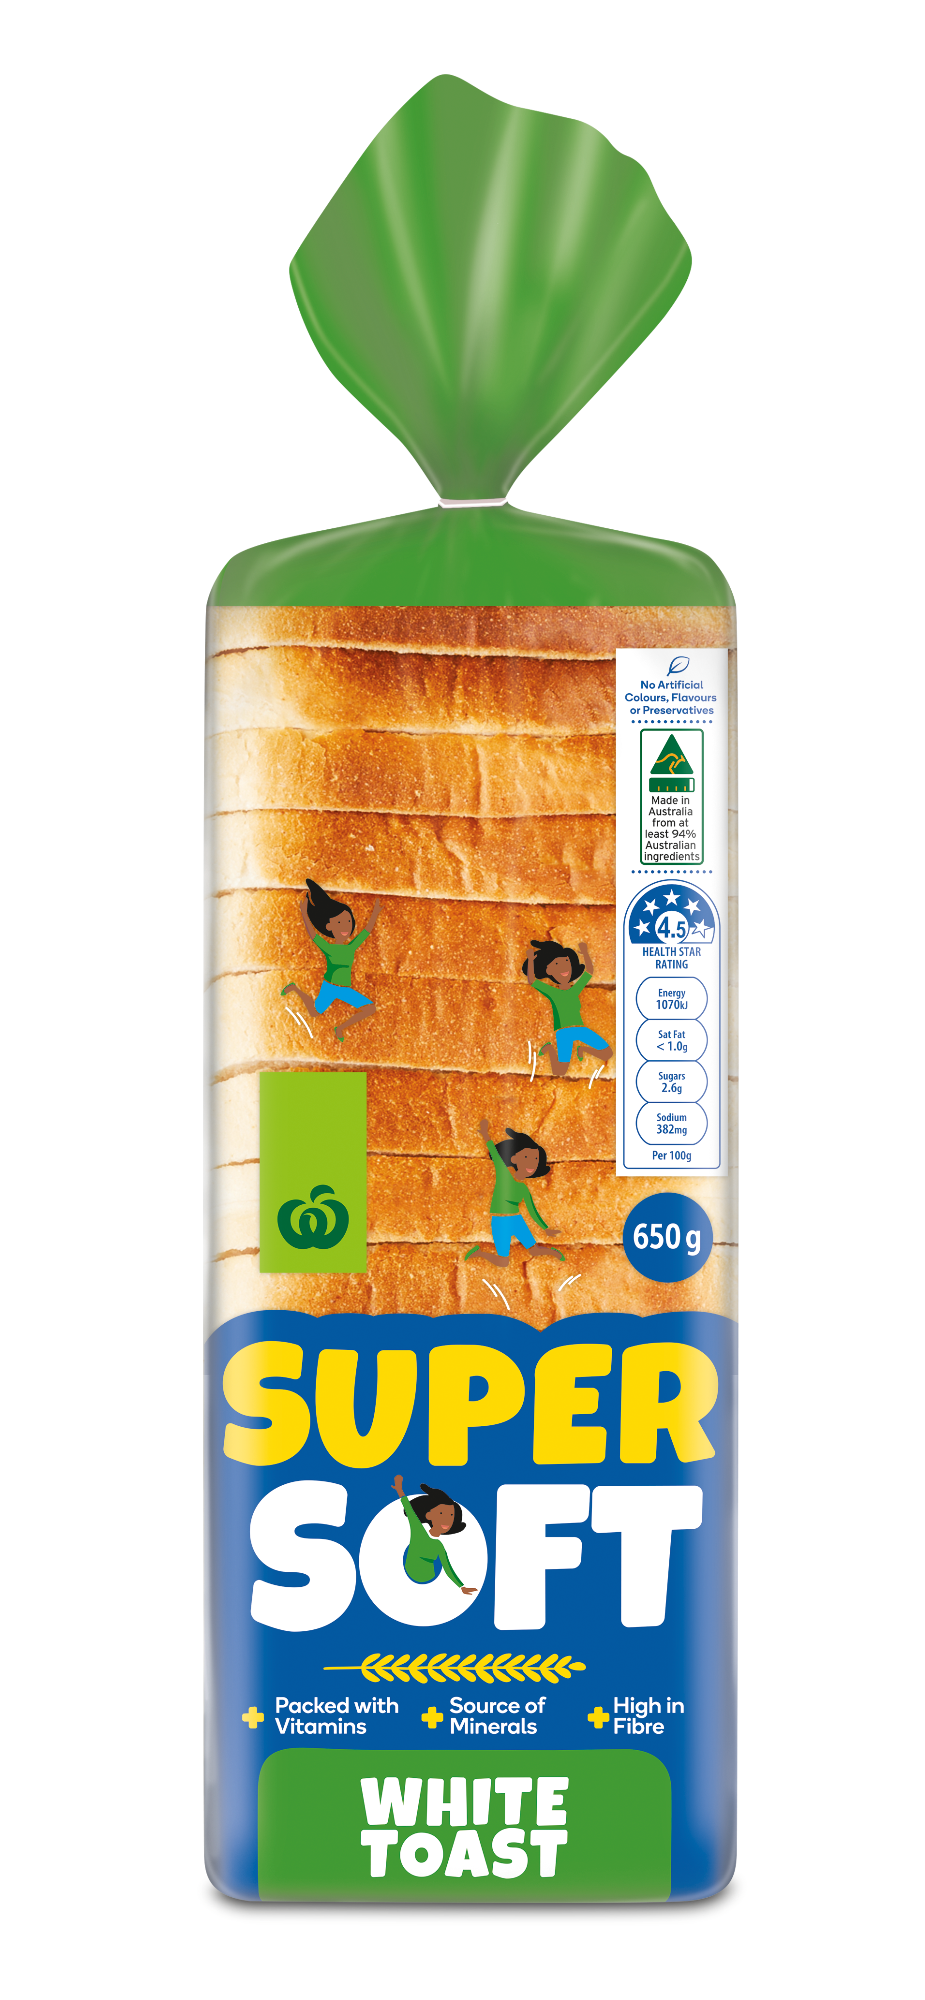 Super Soft White Toast | Stay at Home Mum.com.au